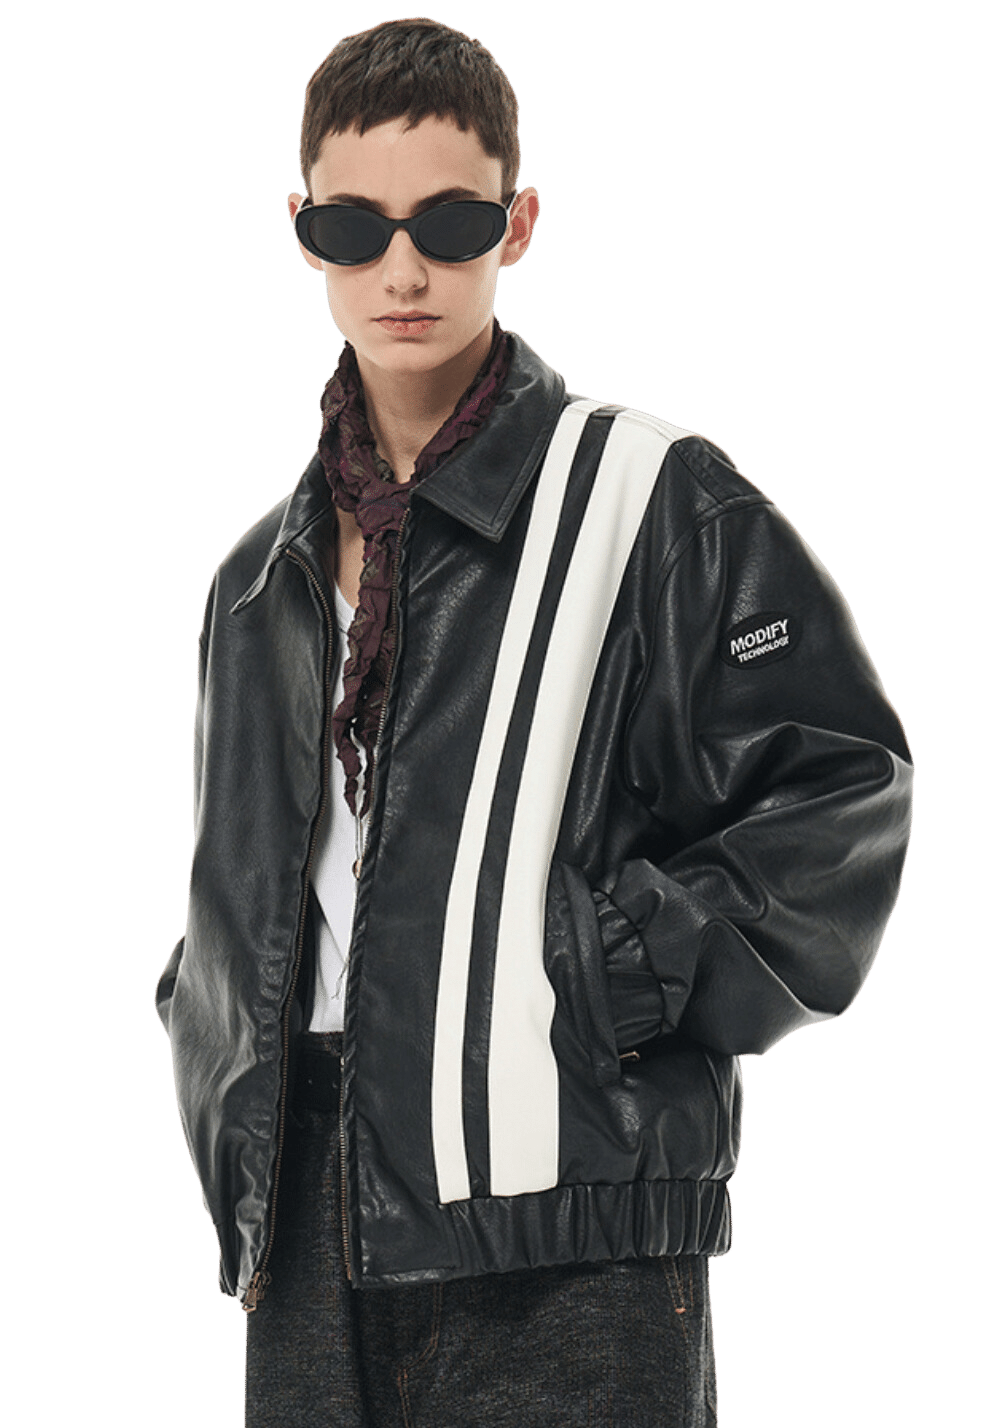 Vintage Lapel Motorcycle Style Leather Jacket - PSYLOS 1, Vintage Lapel Motorcycle Style Leather Jacket, Jacket, MODITEC, PSYLOS 1